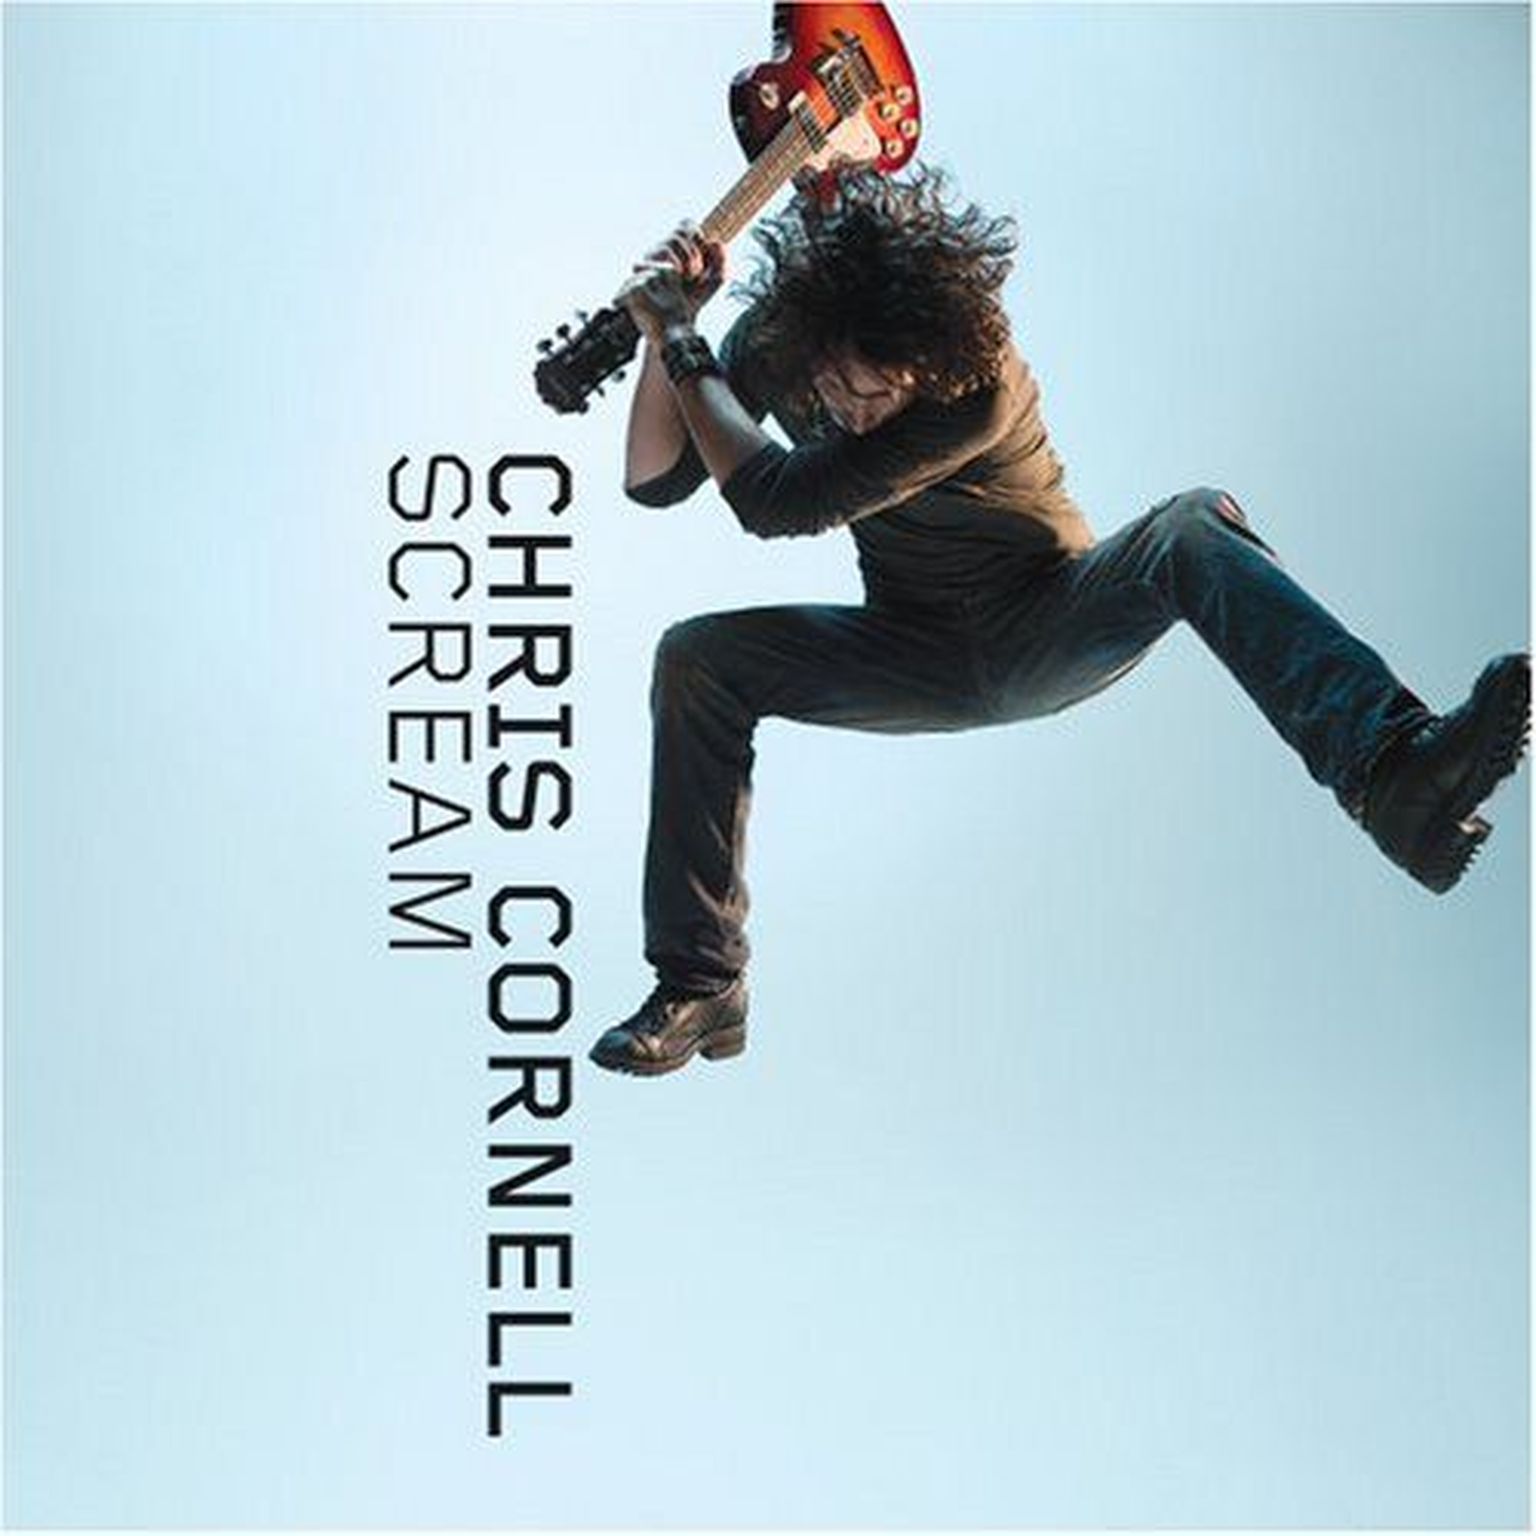 Chris Cornell “Scream”.